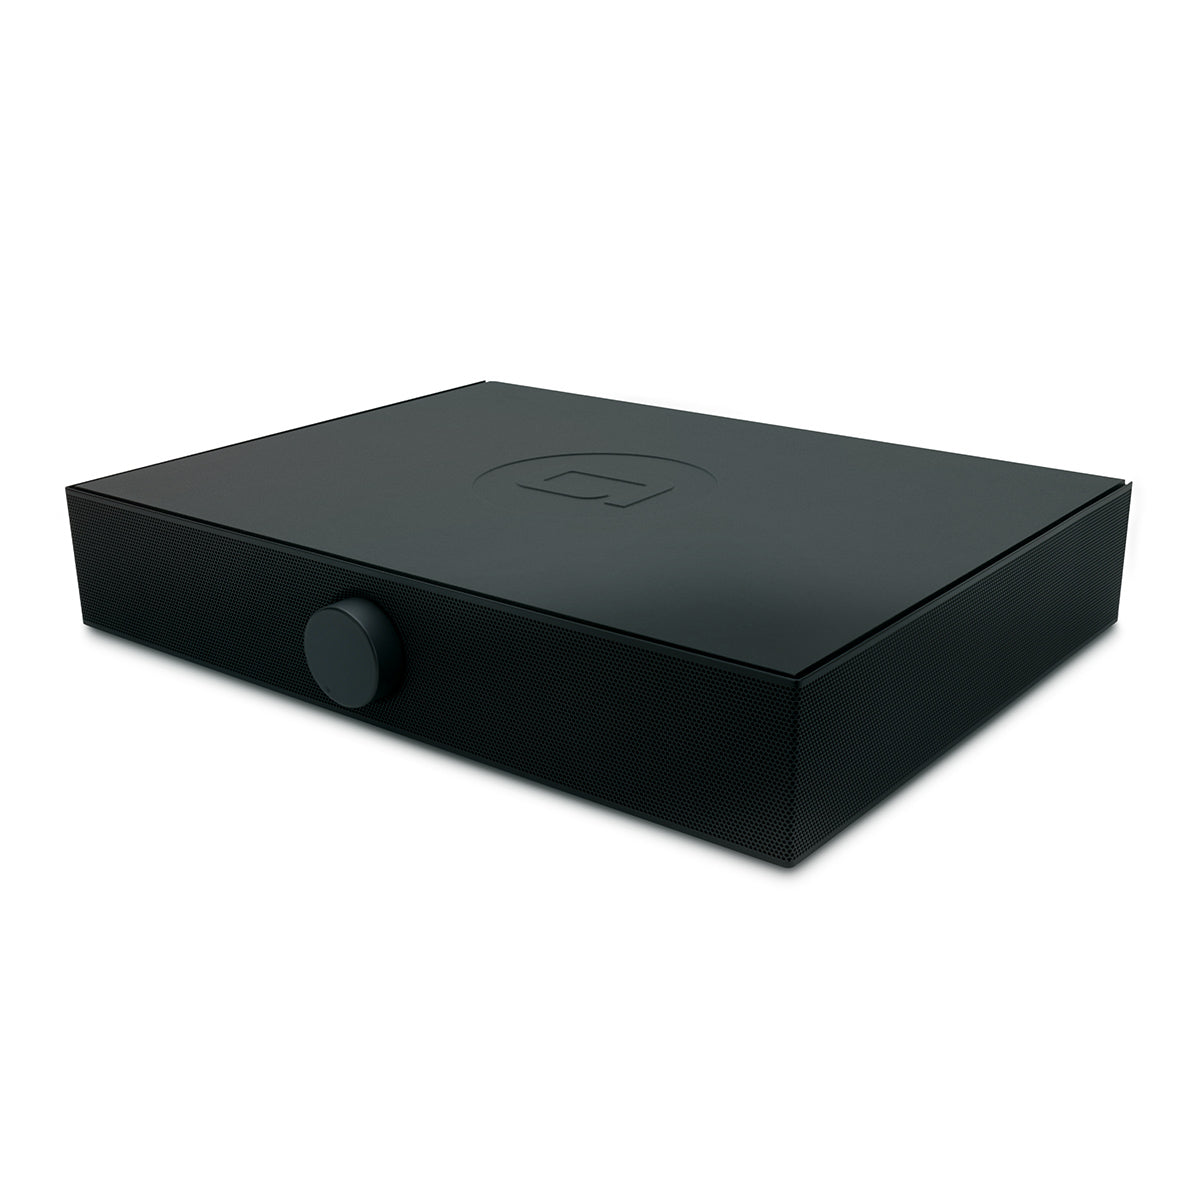 Andover Audio SpinBase Turntable Speaker System (Black)